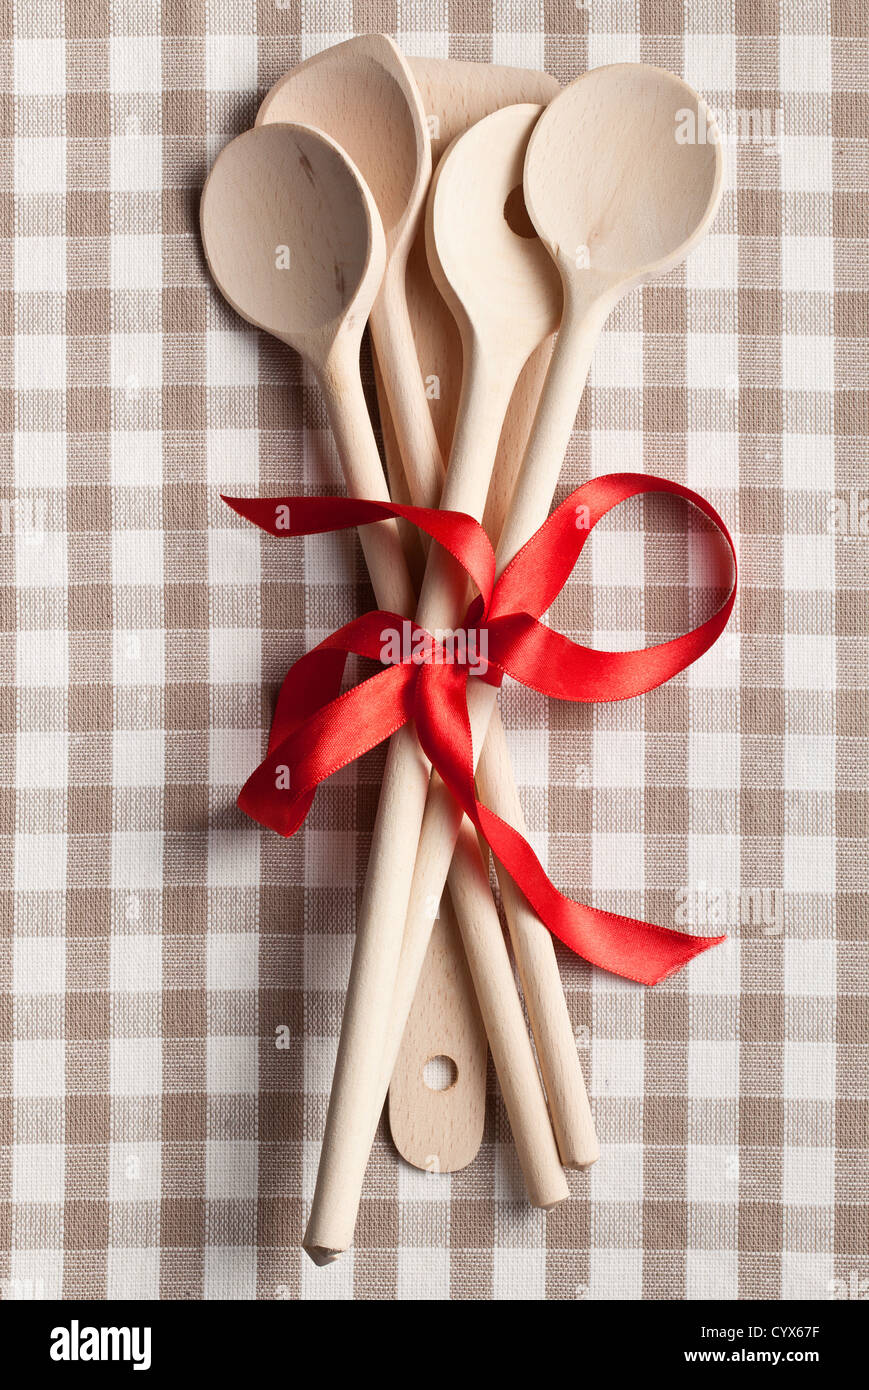 wooden kitchen utensil on checkered napkin Stock Photo